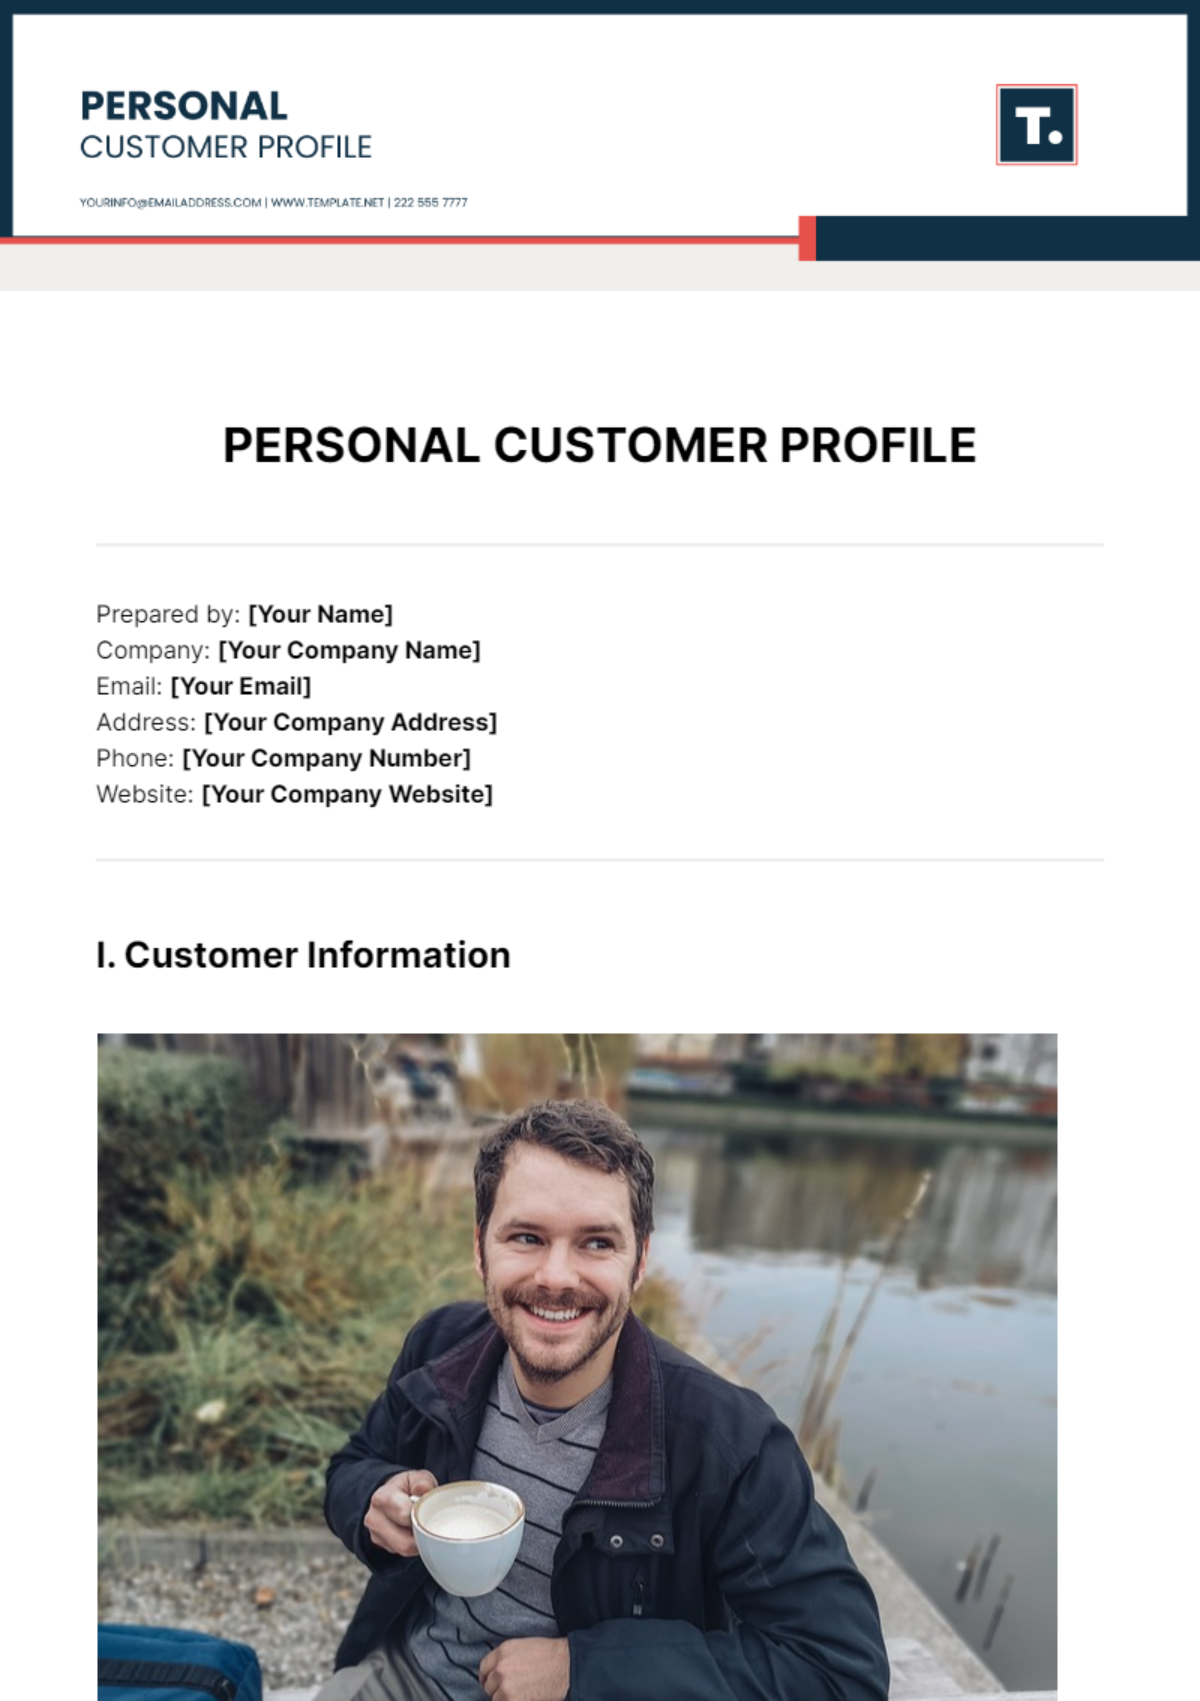 Personal Customer Profile Template